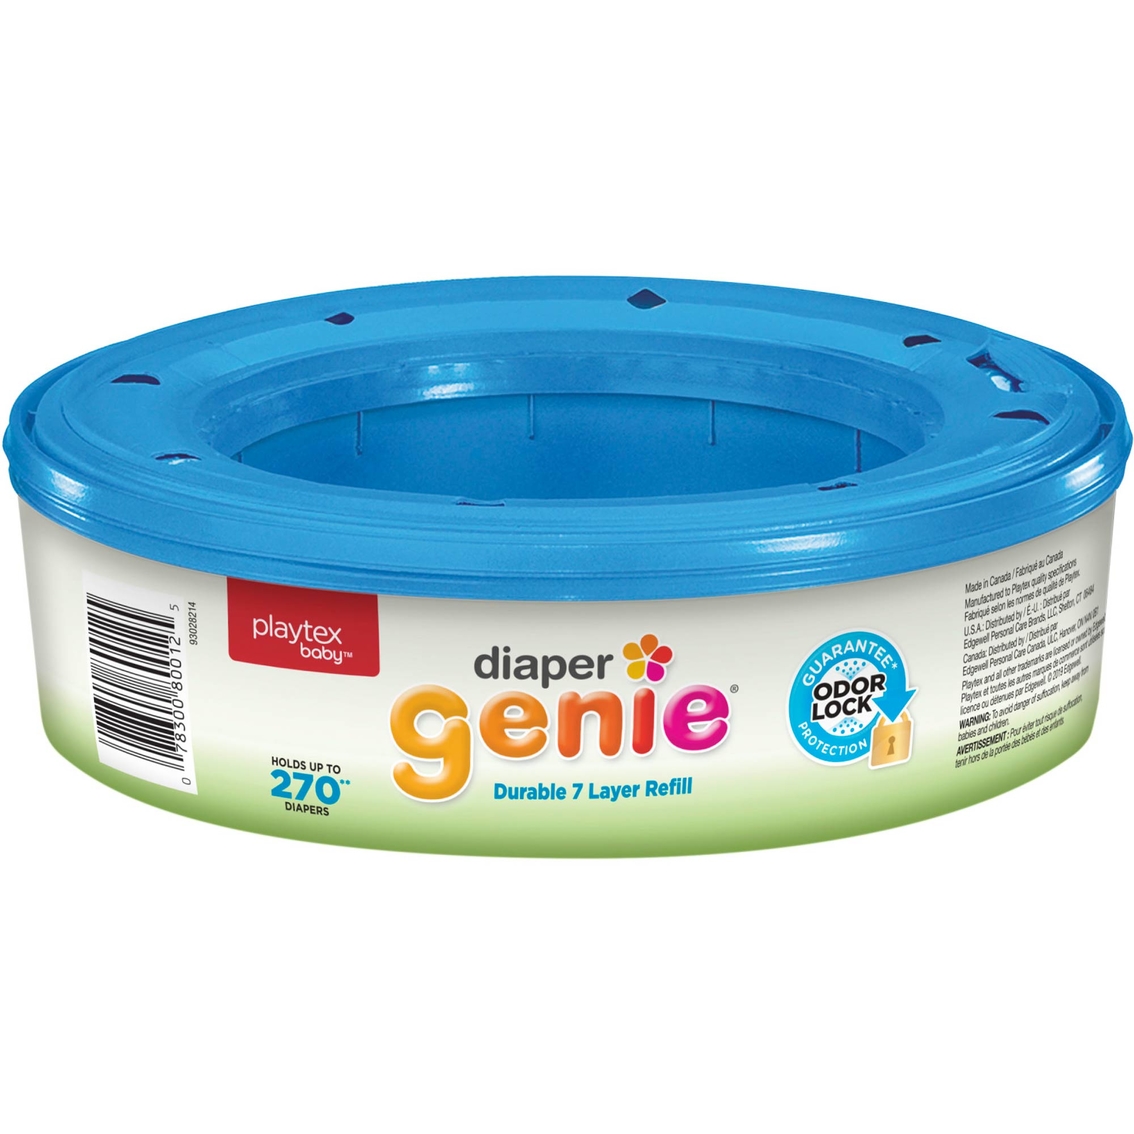 Playtex Baby Diaper Genie Diaper Disposal Pail System Refill 